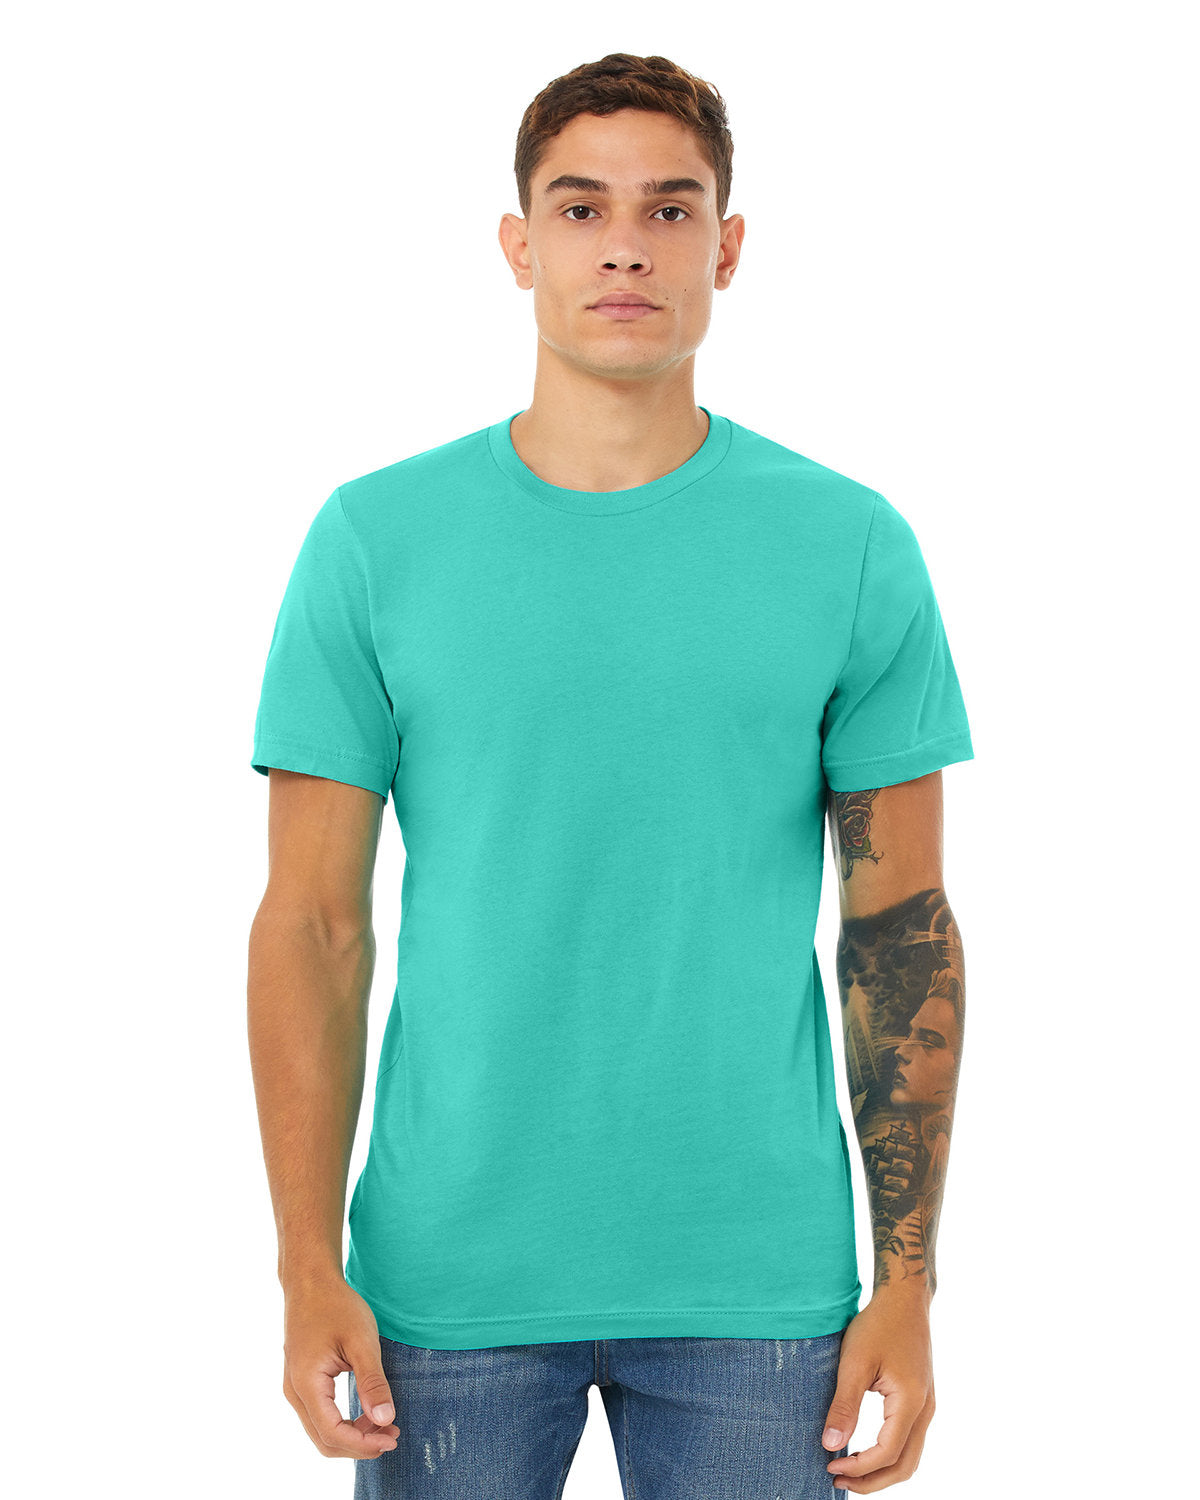 3001C- Bella+Canvas Unisex Jersey T-Shirt